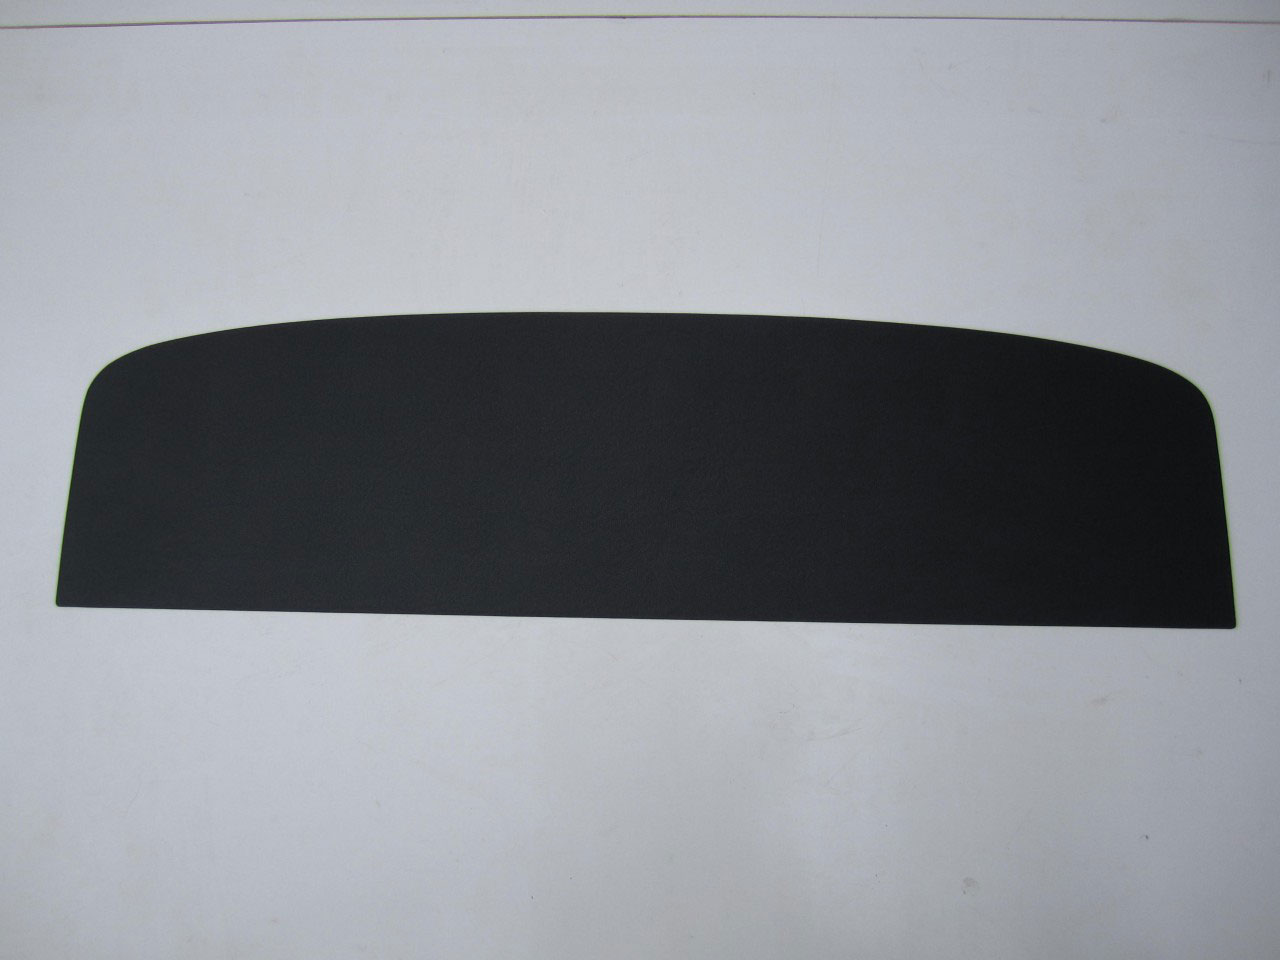 Holden Monaro HK Monaro Coupe 10X Black Parcel Shelf (Image 1 of 7)